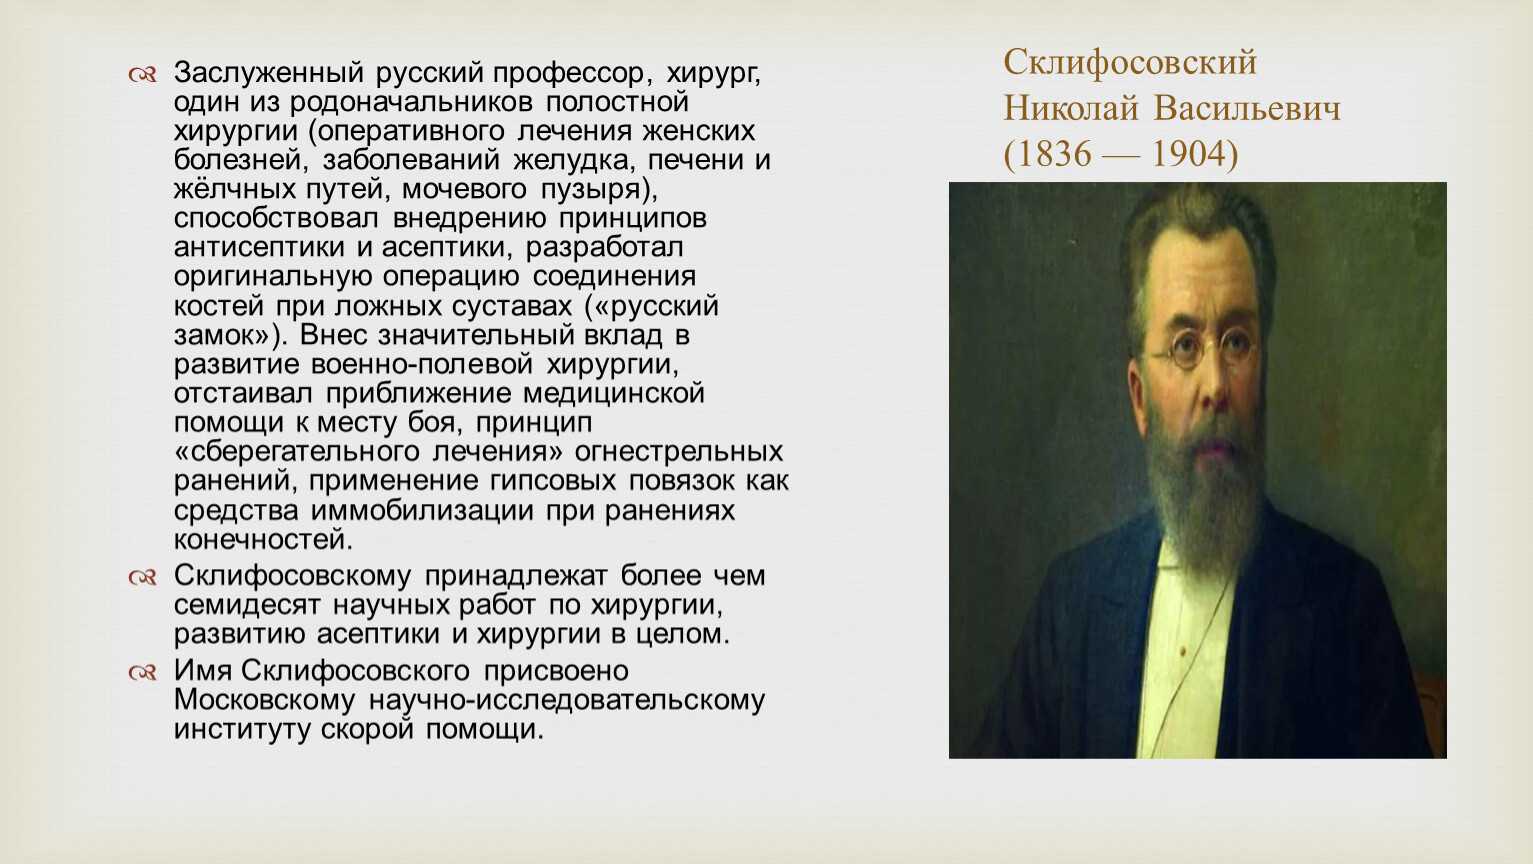 Николай Васильевич Склифосовский (1836 — 1904)